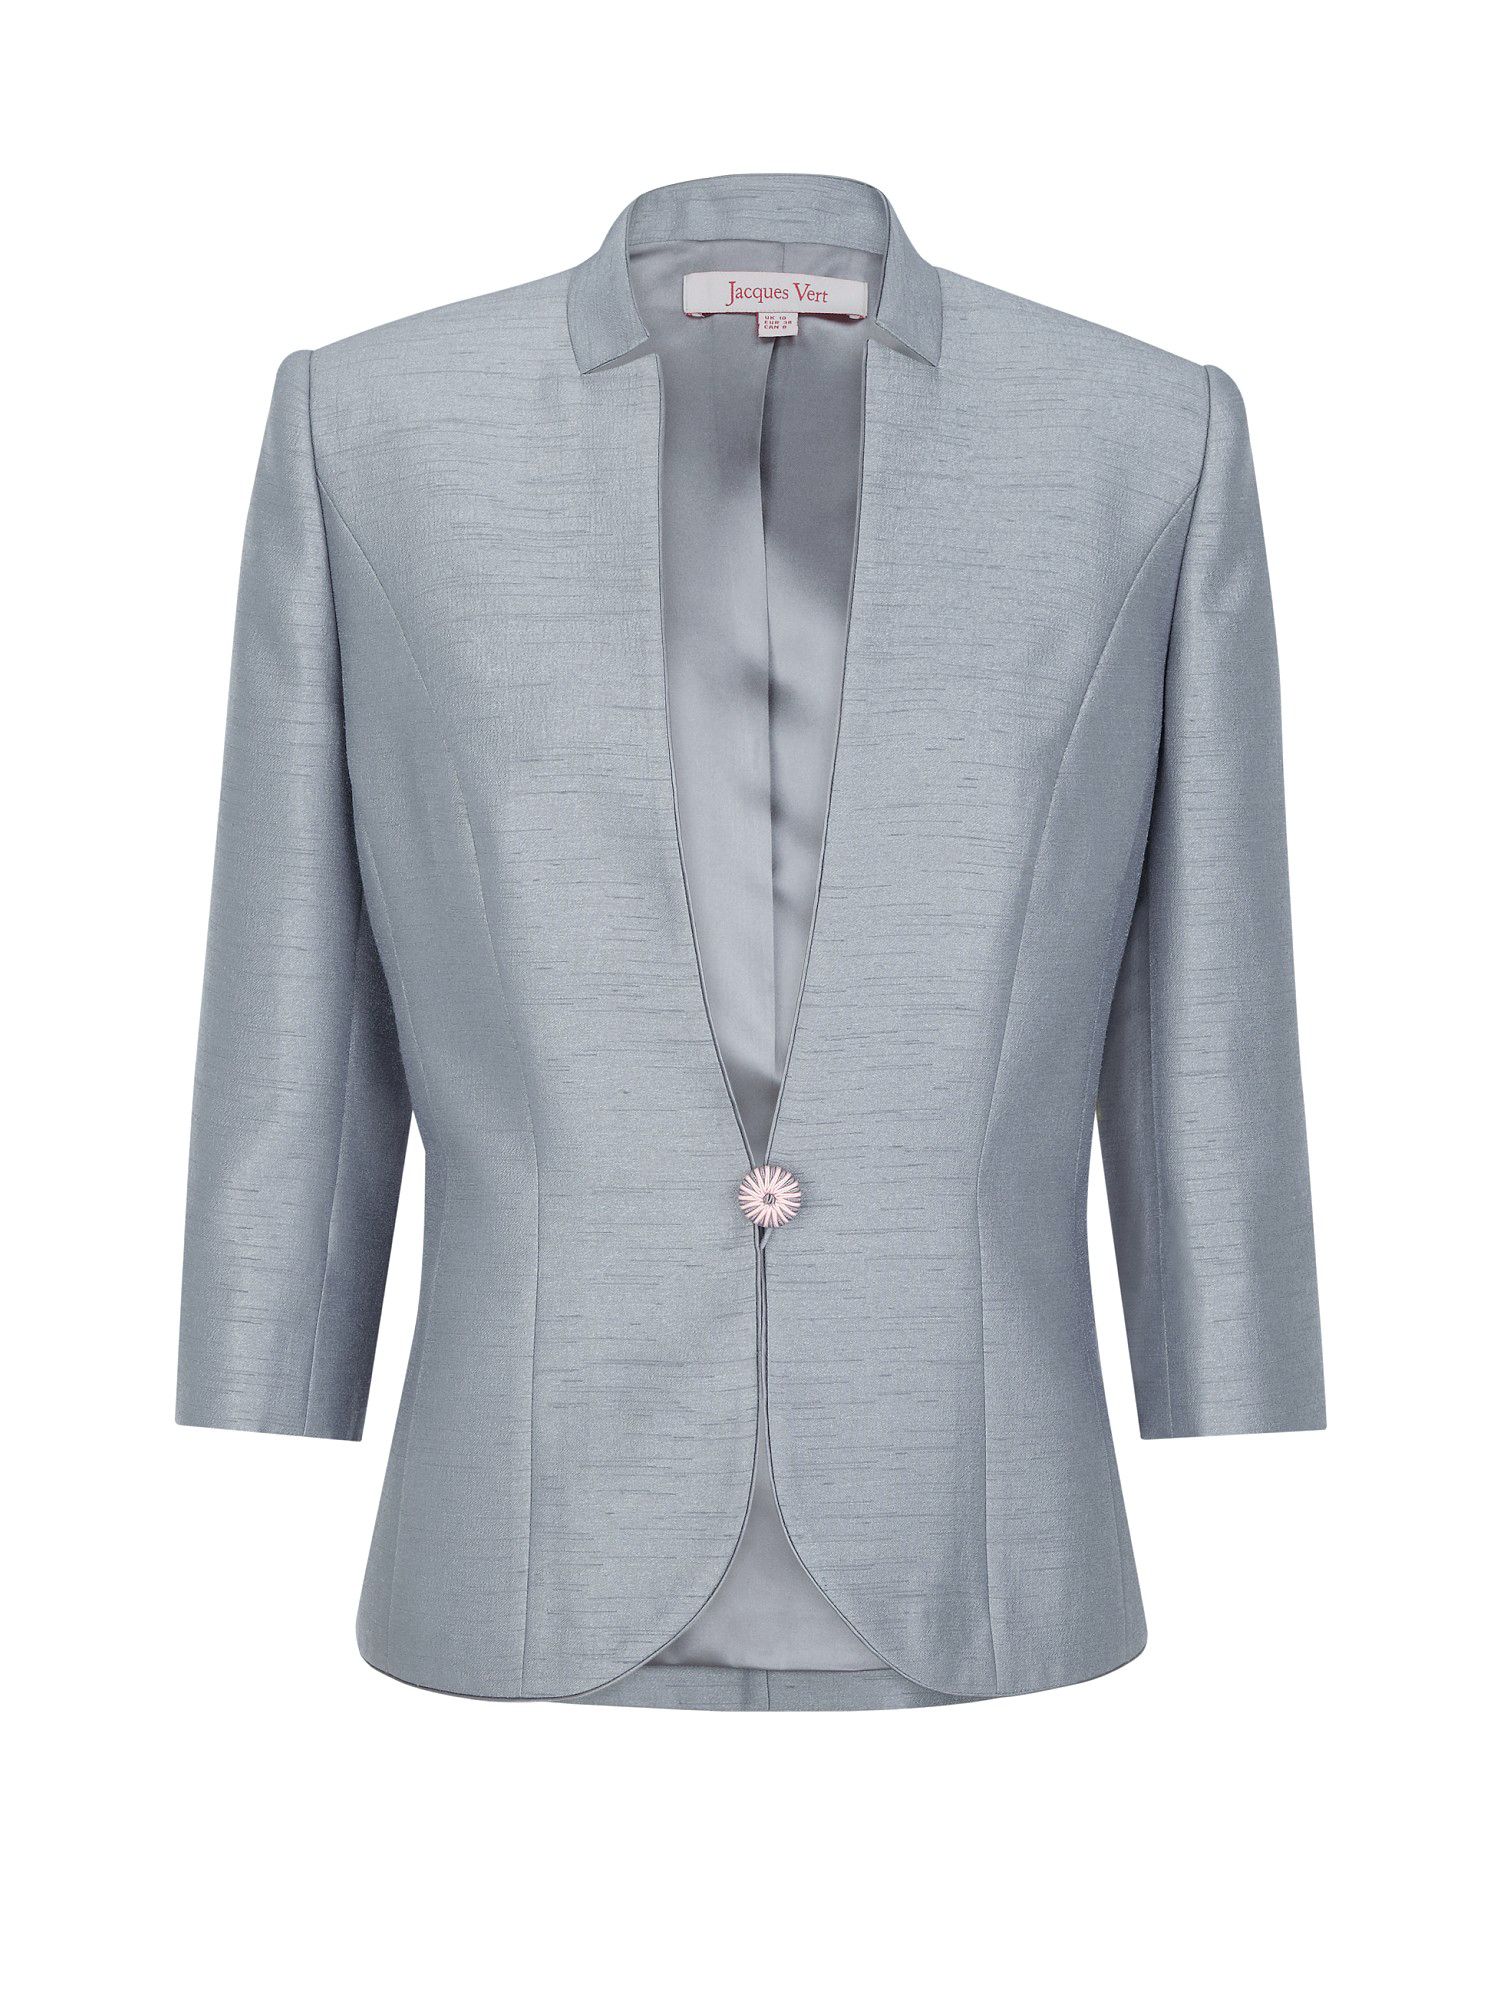 Jacques Vert Earl Grey Jacket in Blue (grey) | Lyst